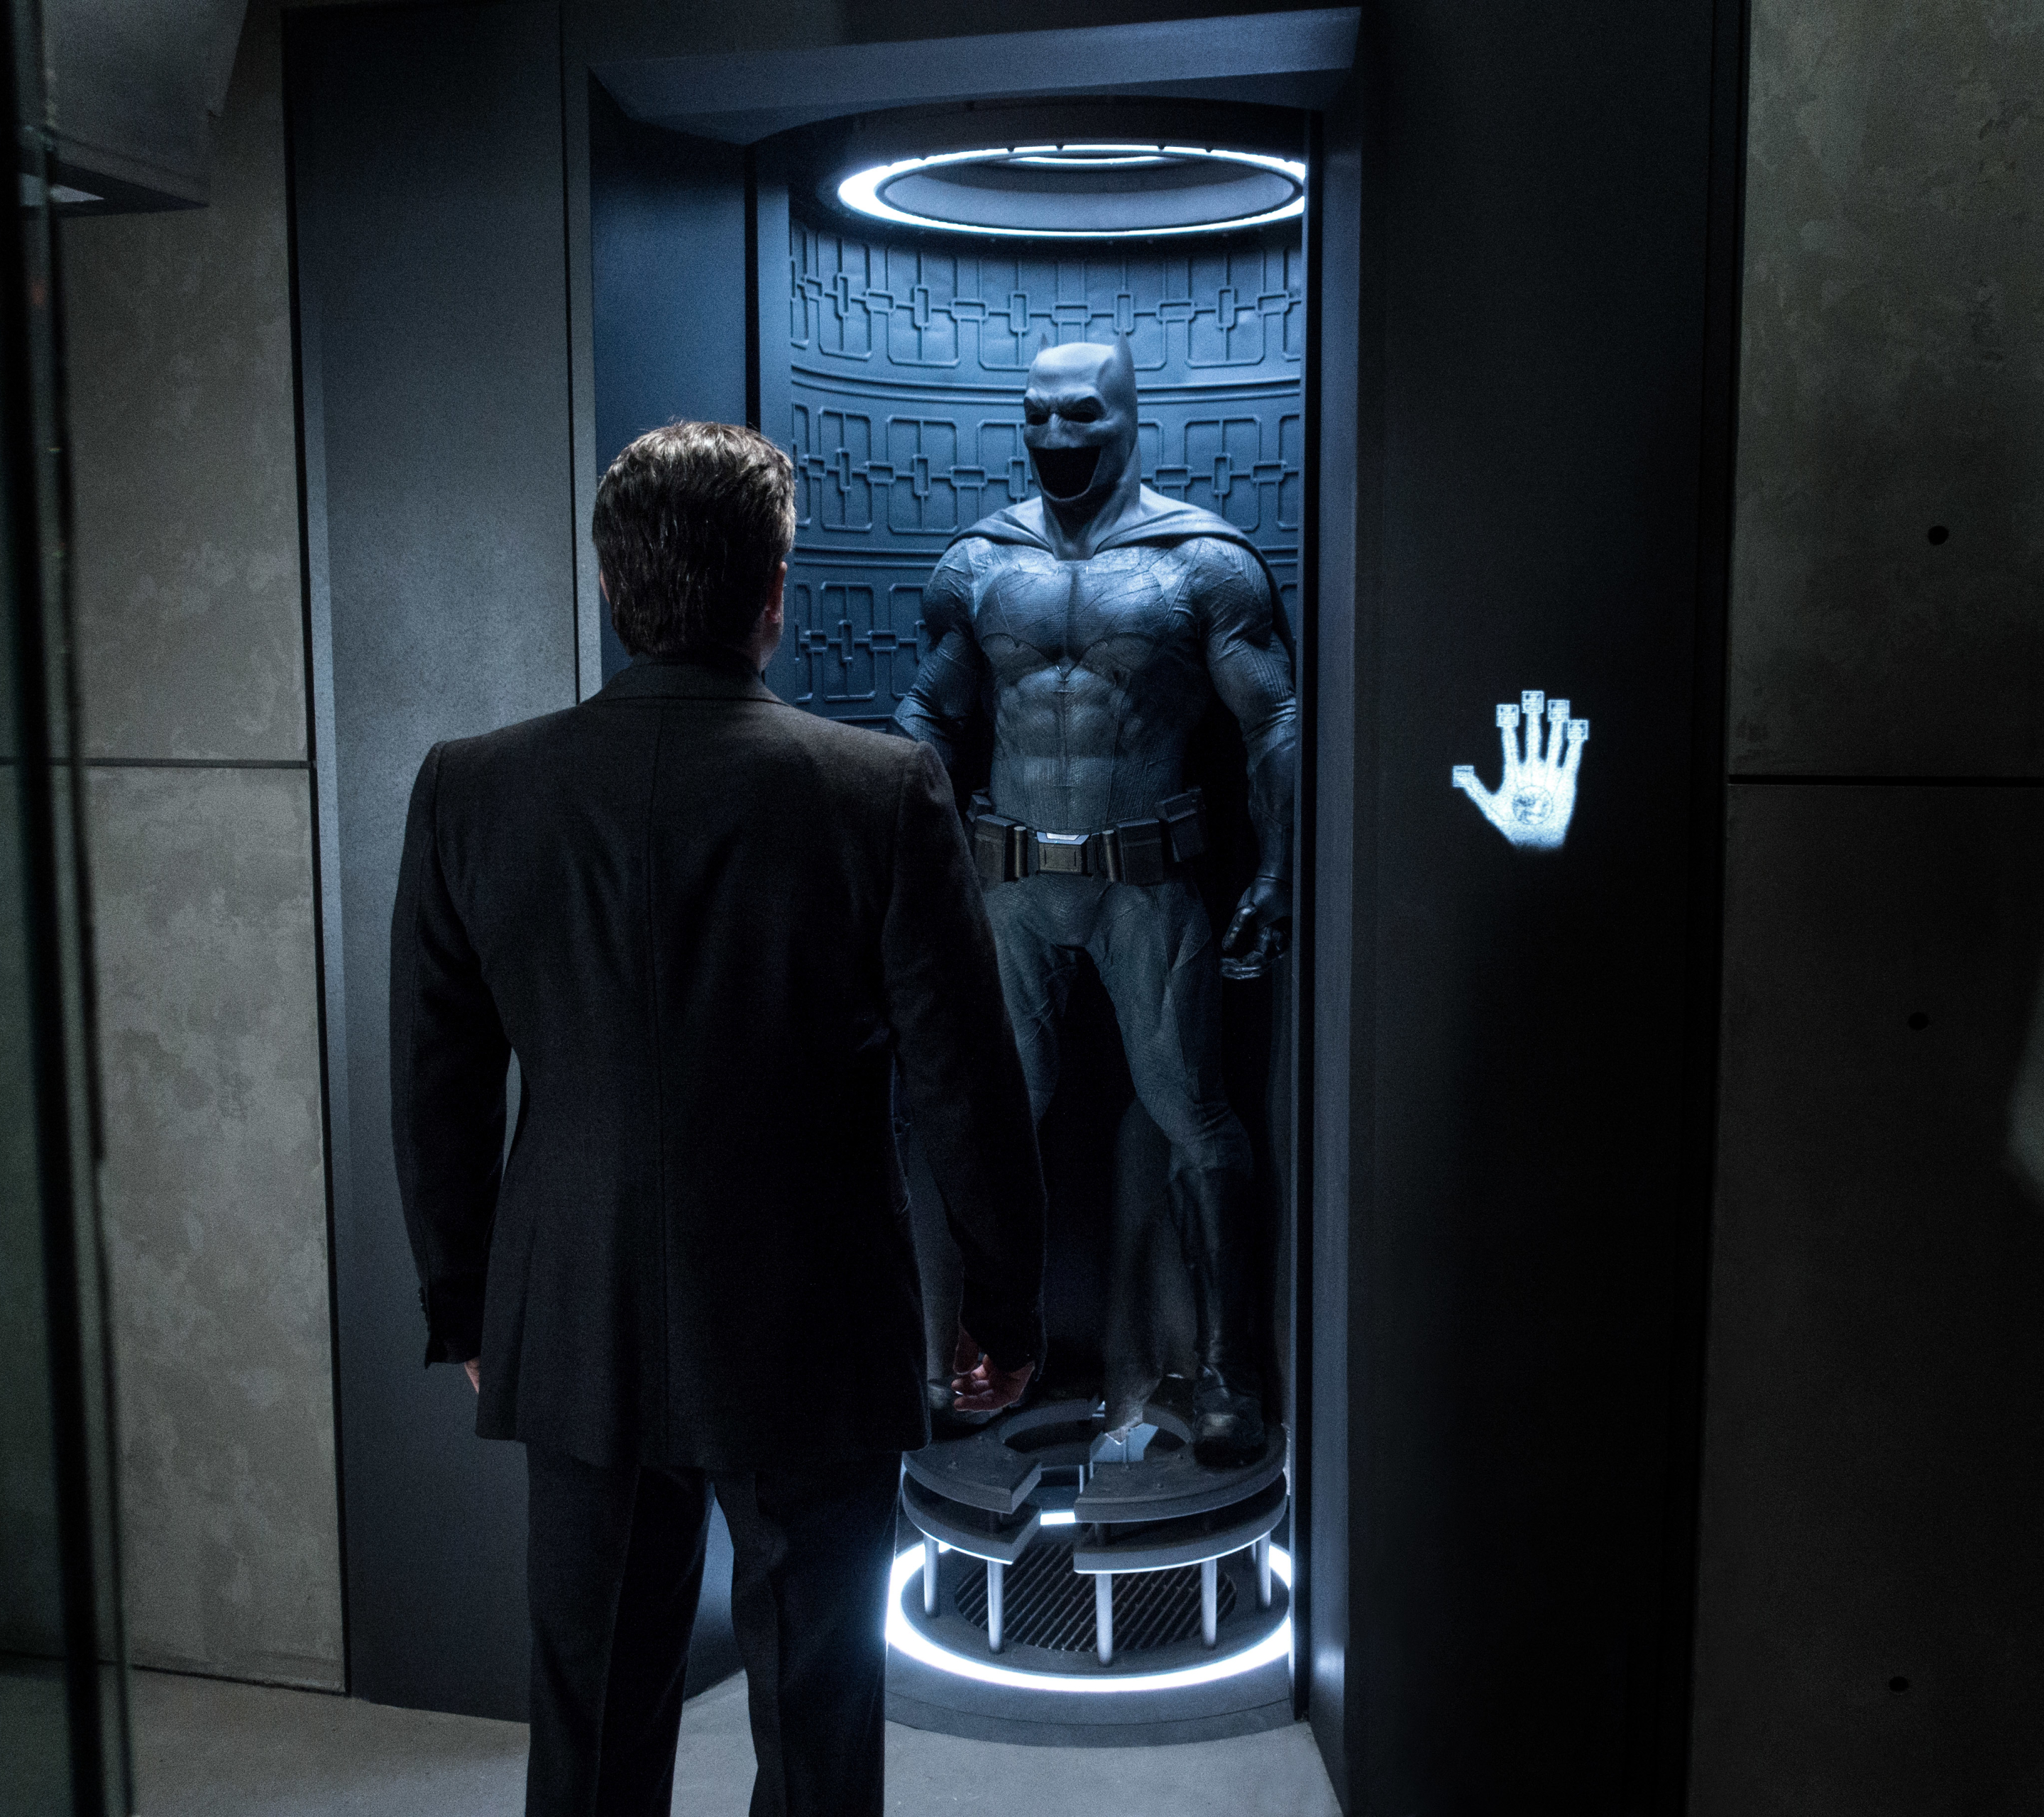 Скачать обои бесплатно Кино, Бэтмен, Супермен, Бен Аффлек, Бэтмен Против Супермена: На Заре Справедливости картинка на рабочий стол ПК